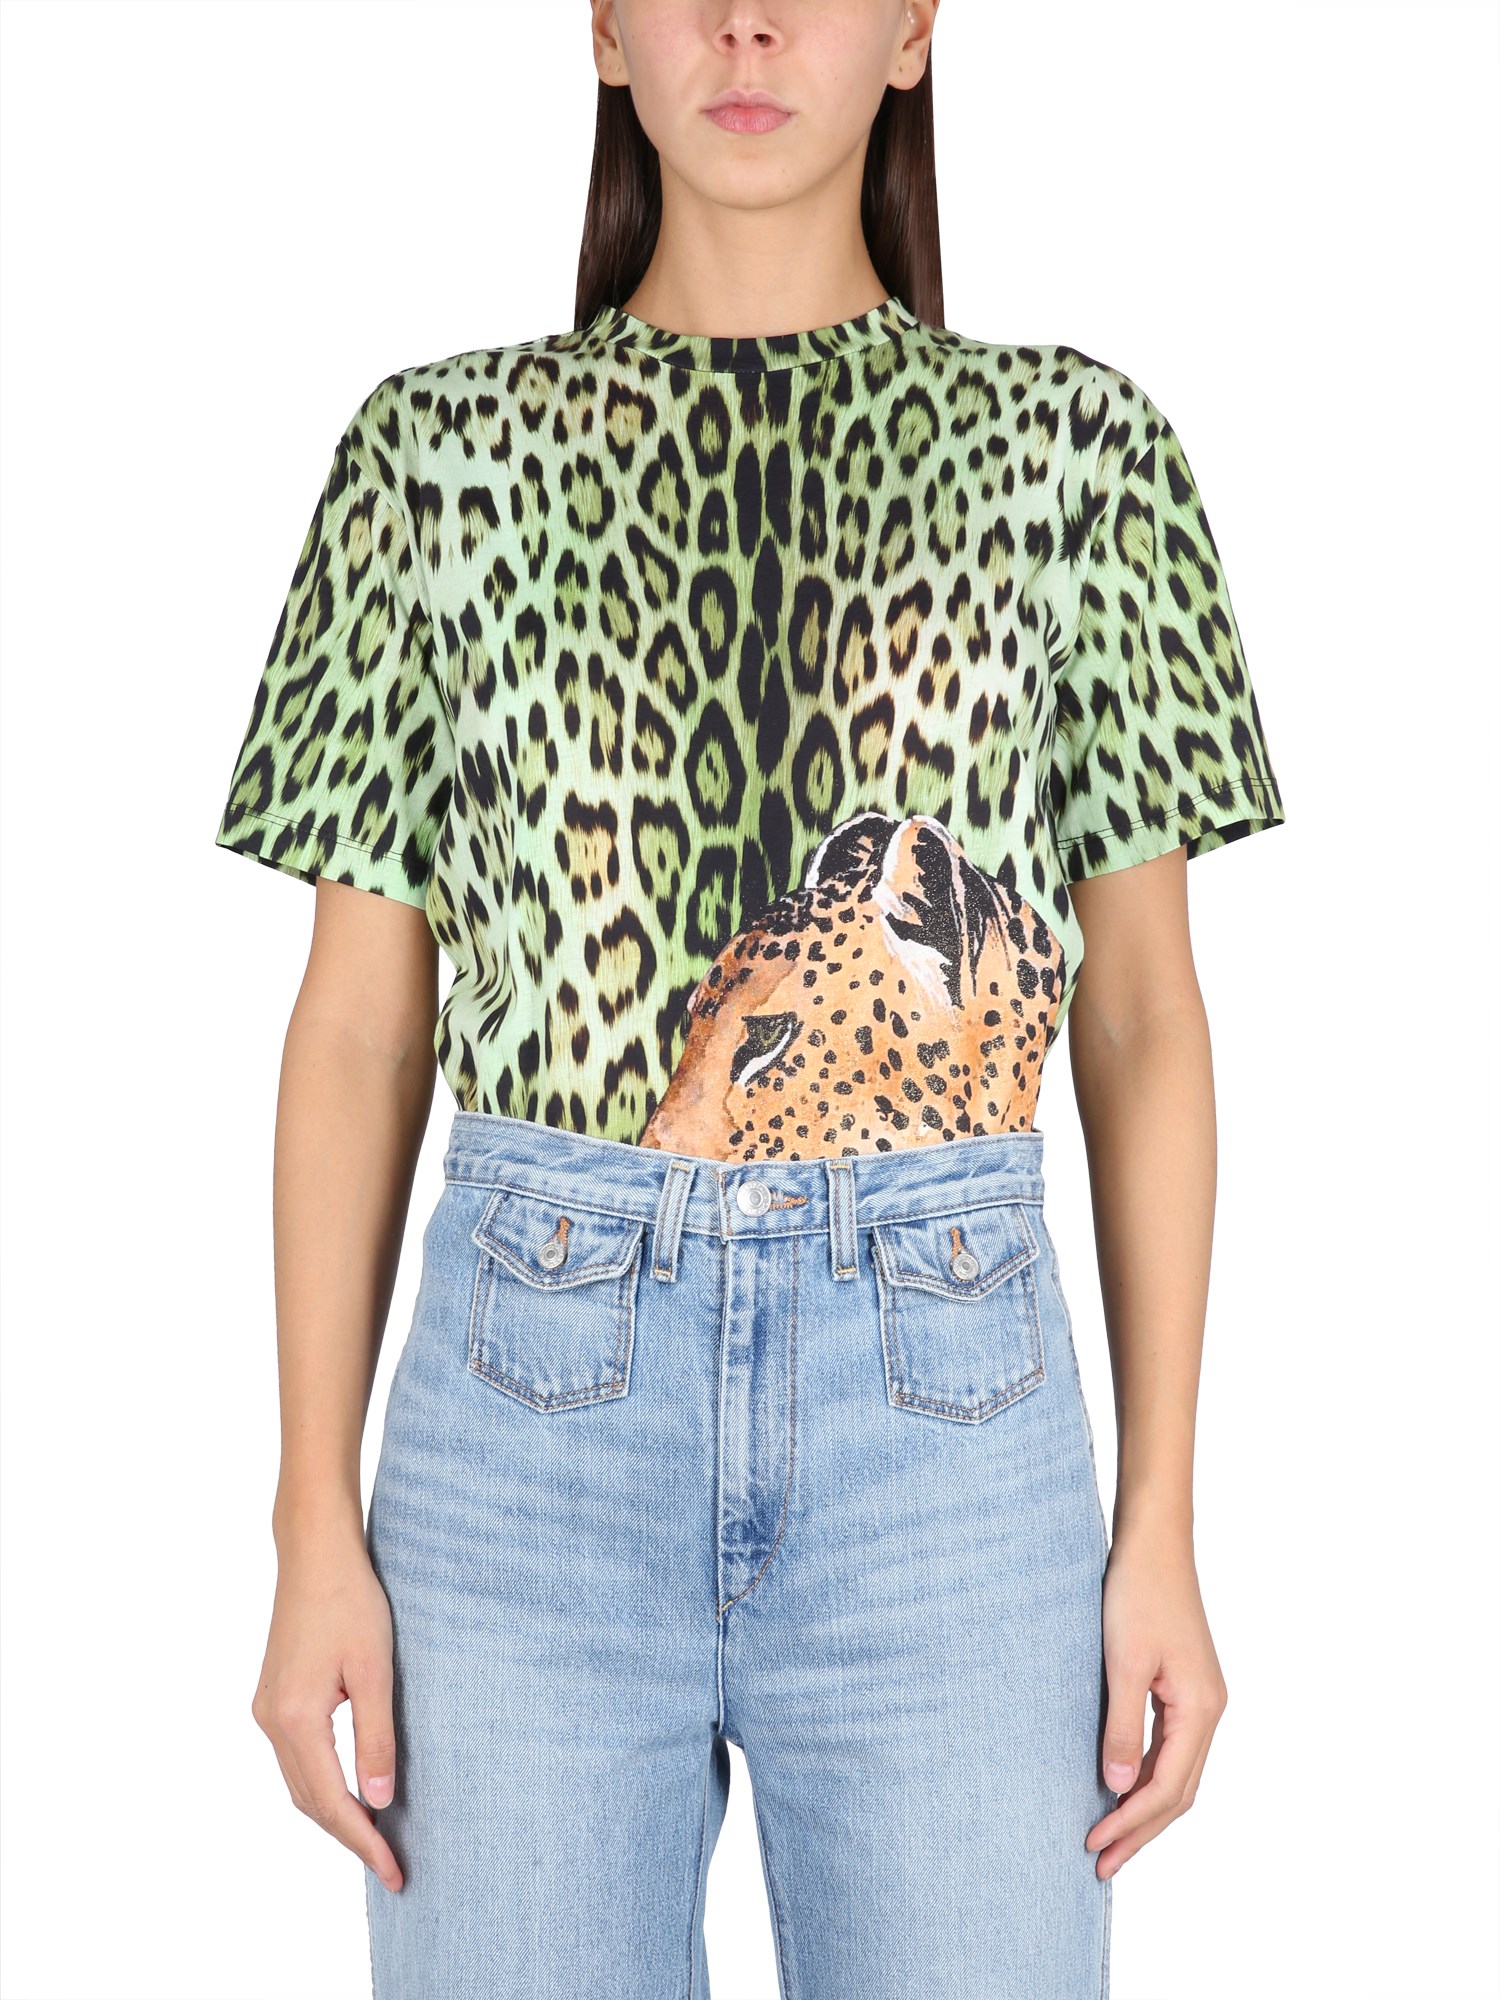 roberto cavalli jaguar print t-shirt